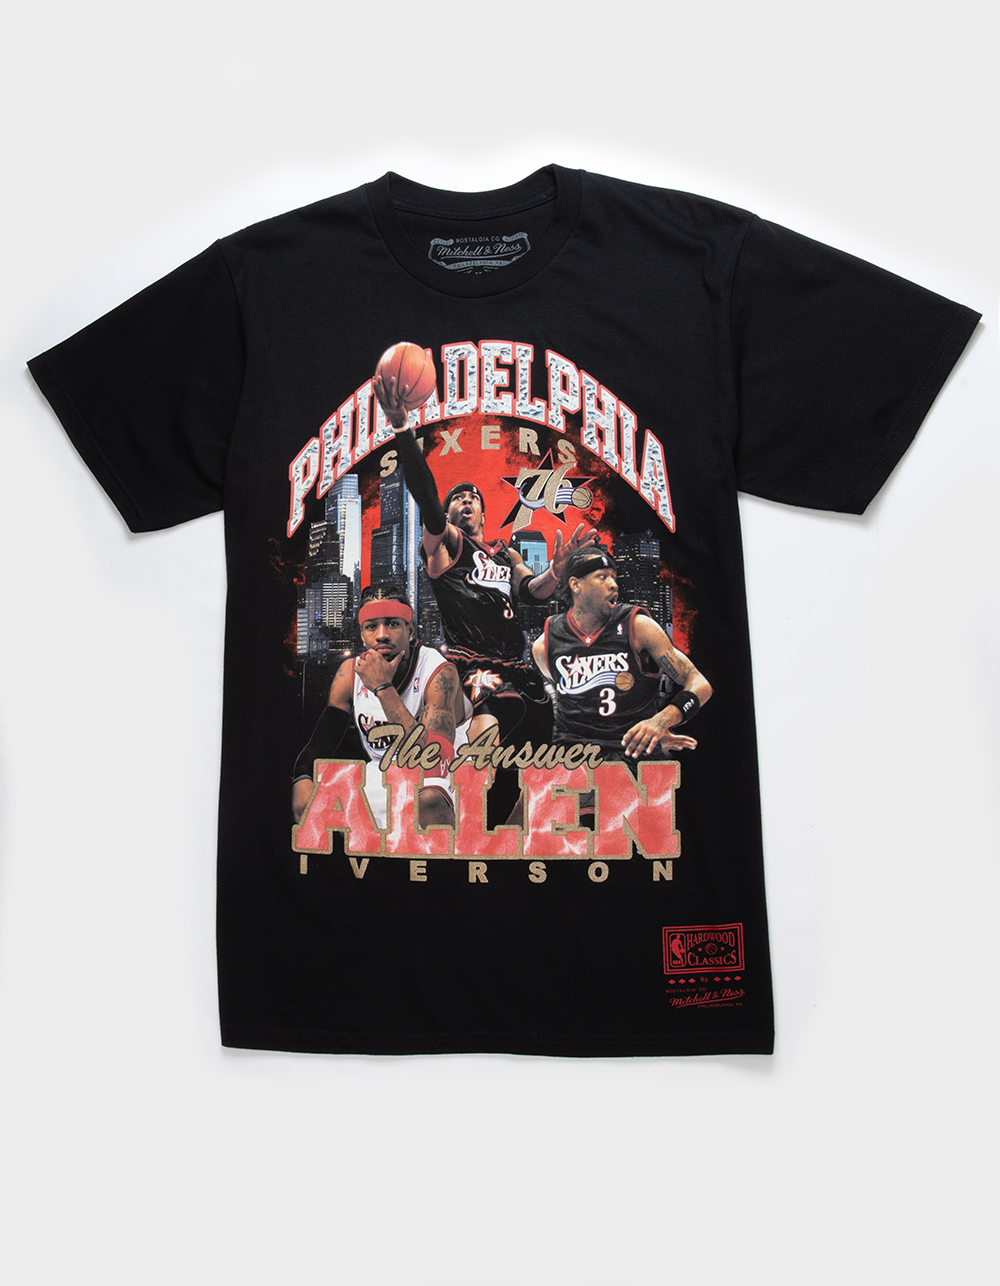 Philadelphia 76ers Sixers Adidas Allen Iverson Throwback Adidas Shirt